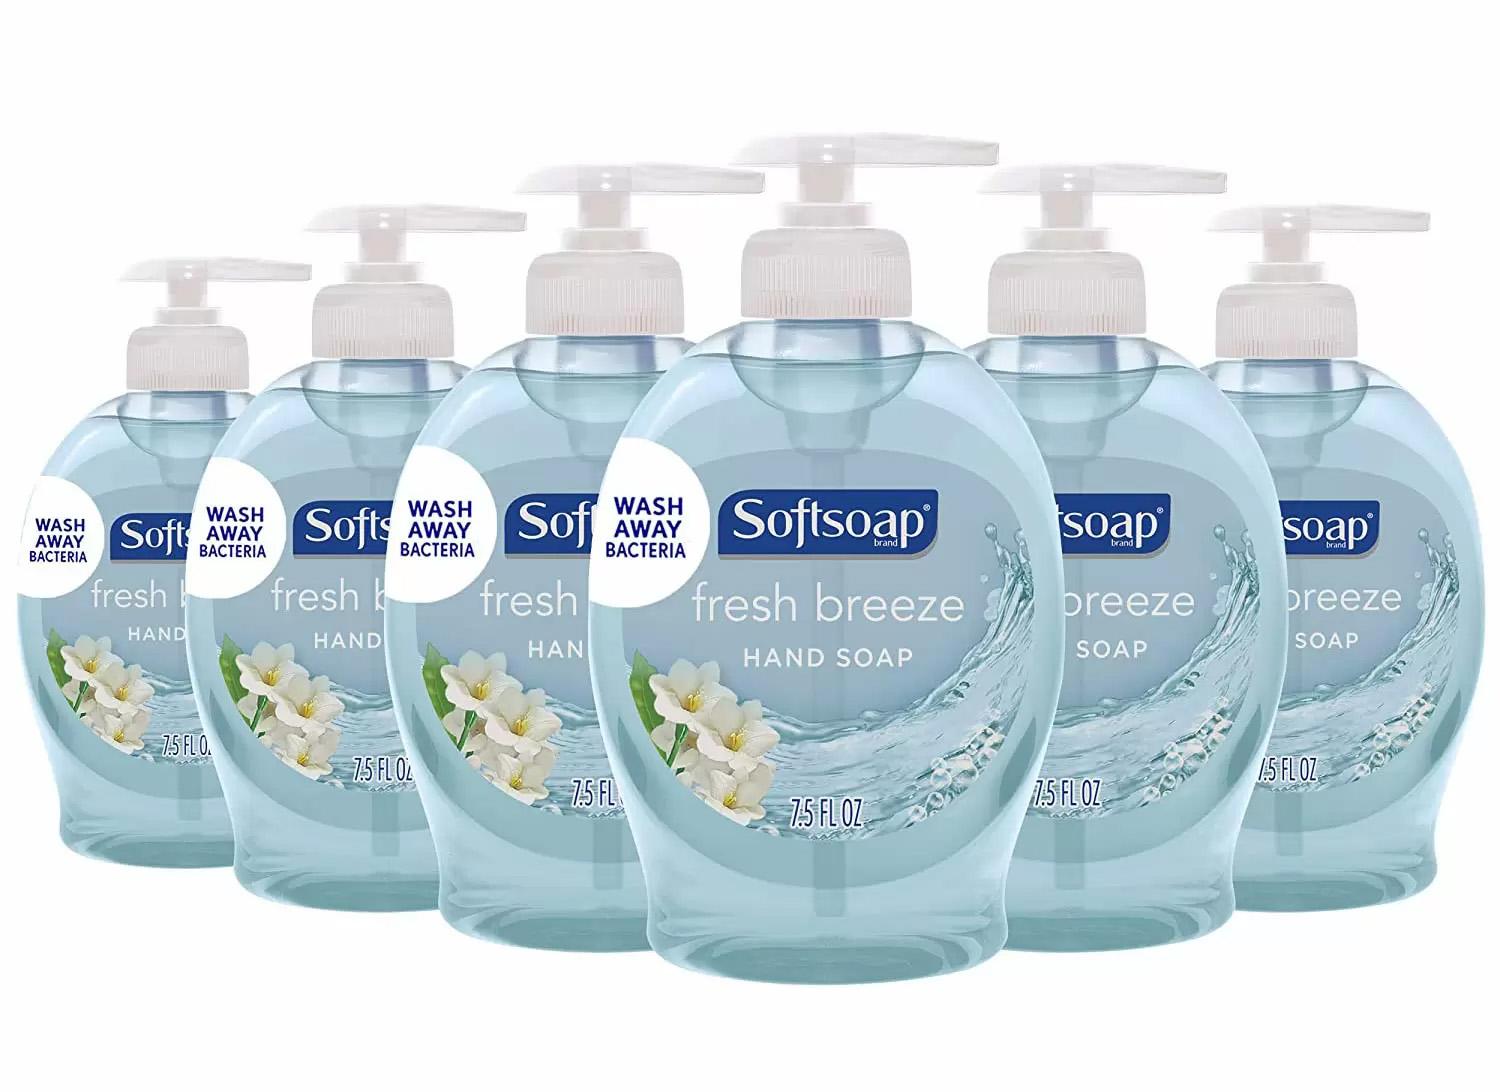 6x Softsoap Liquid Hand Soap for $4.44